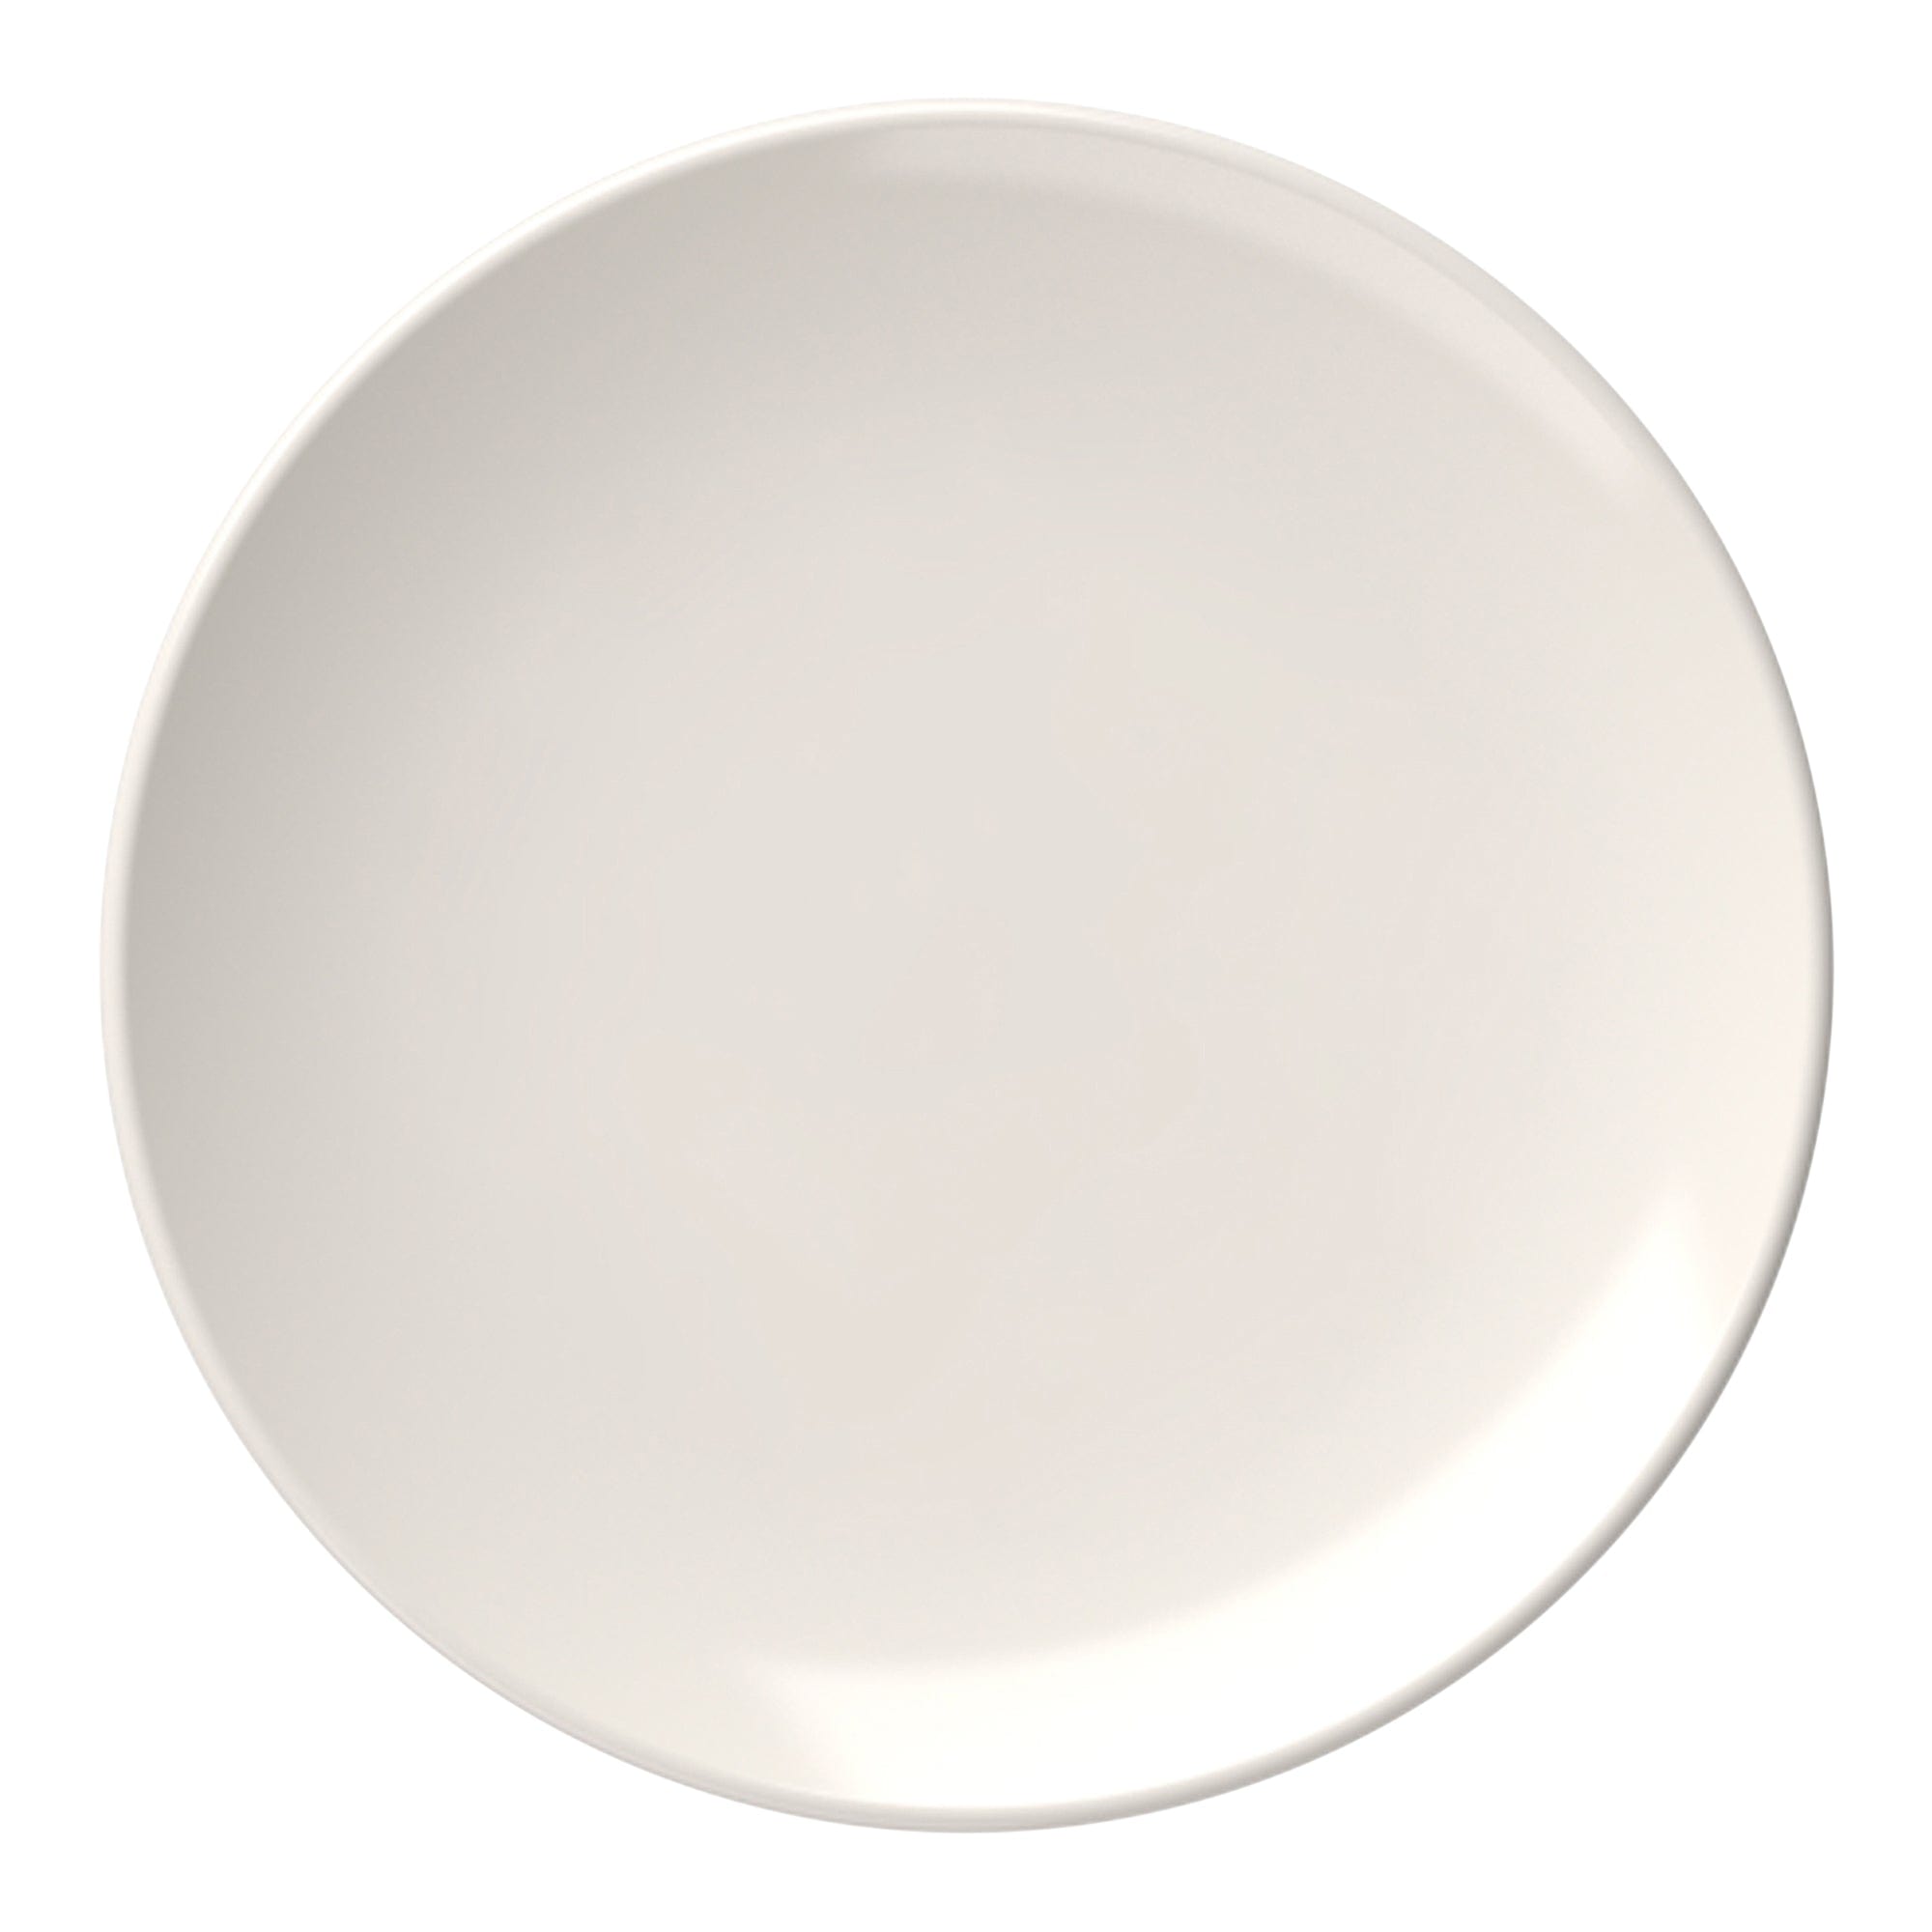 Lona Porcelain Plate 10.7"